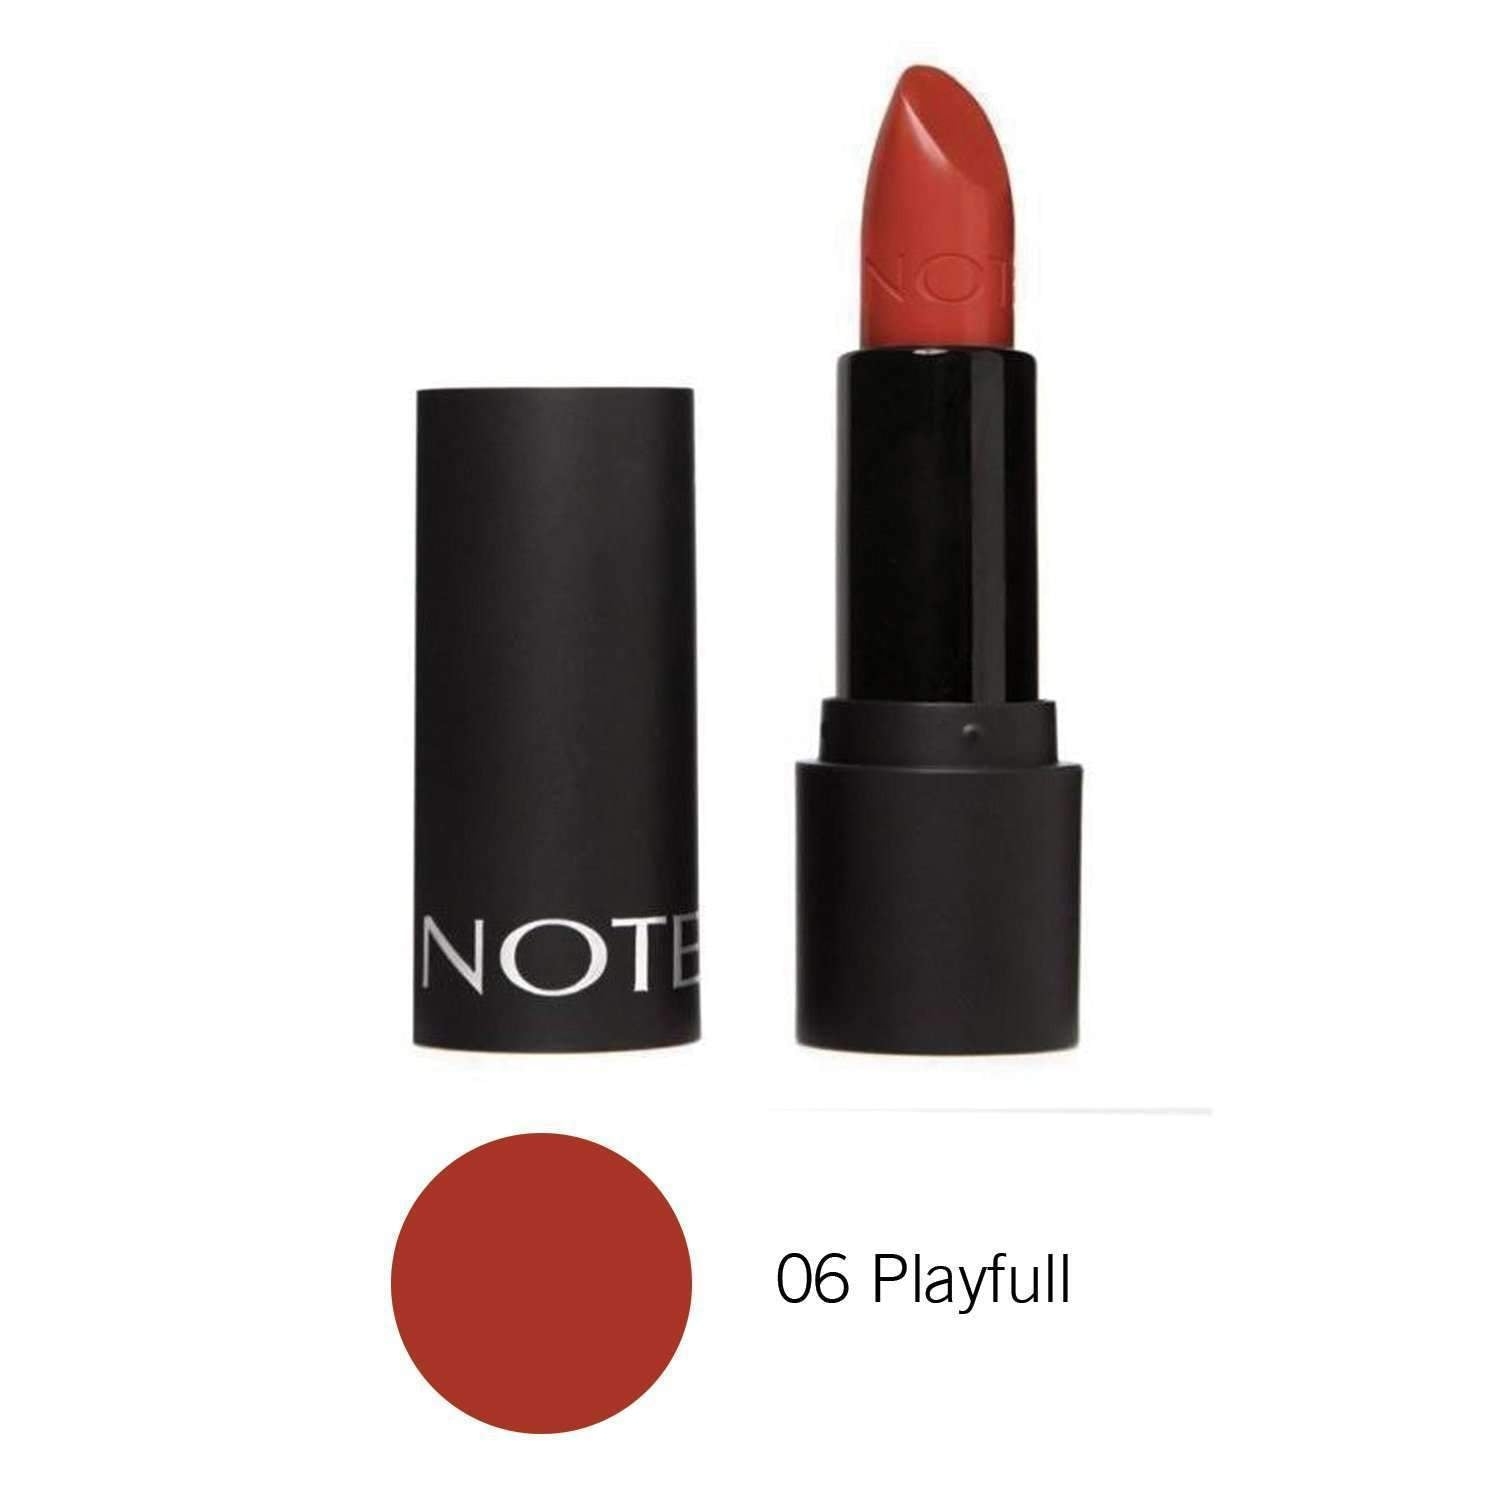 NOTE | Playfull Lipstick